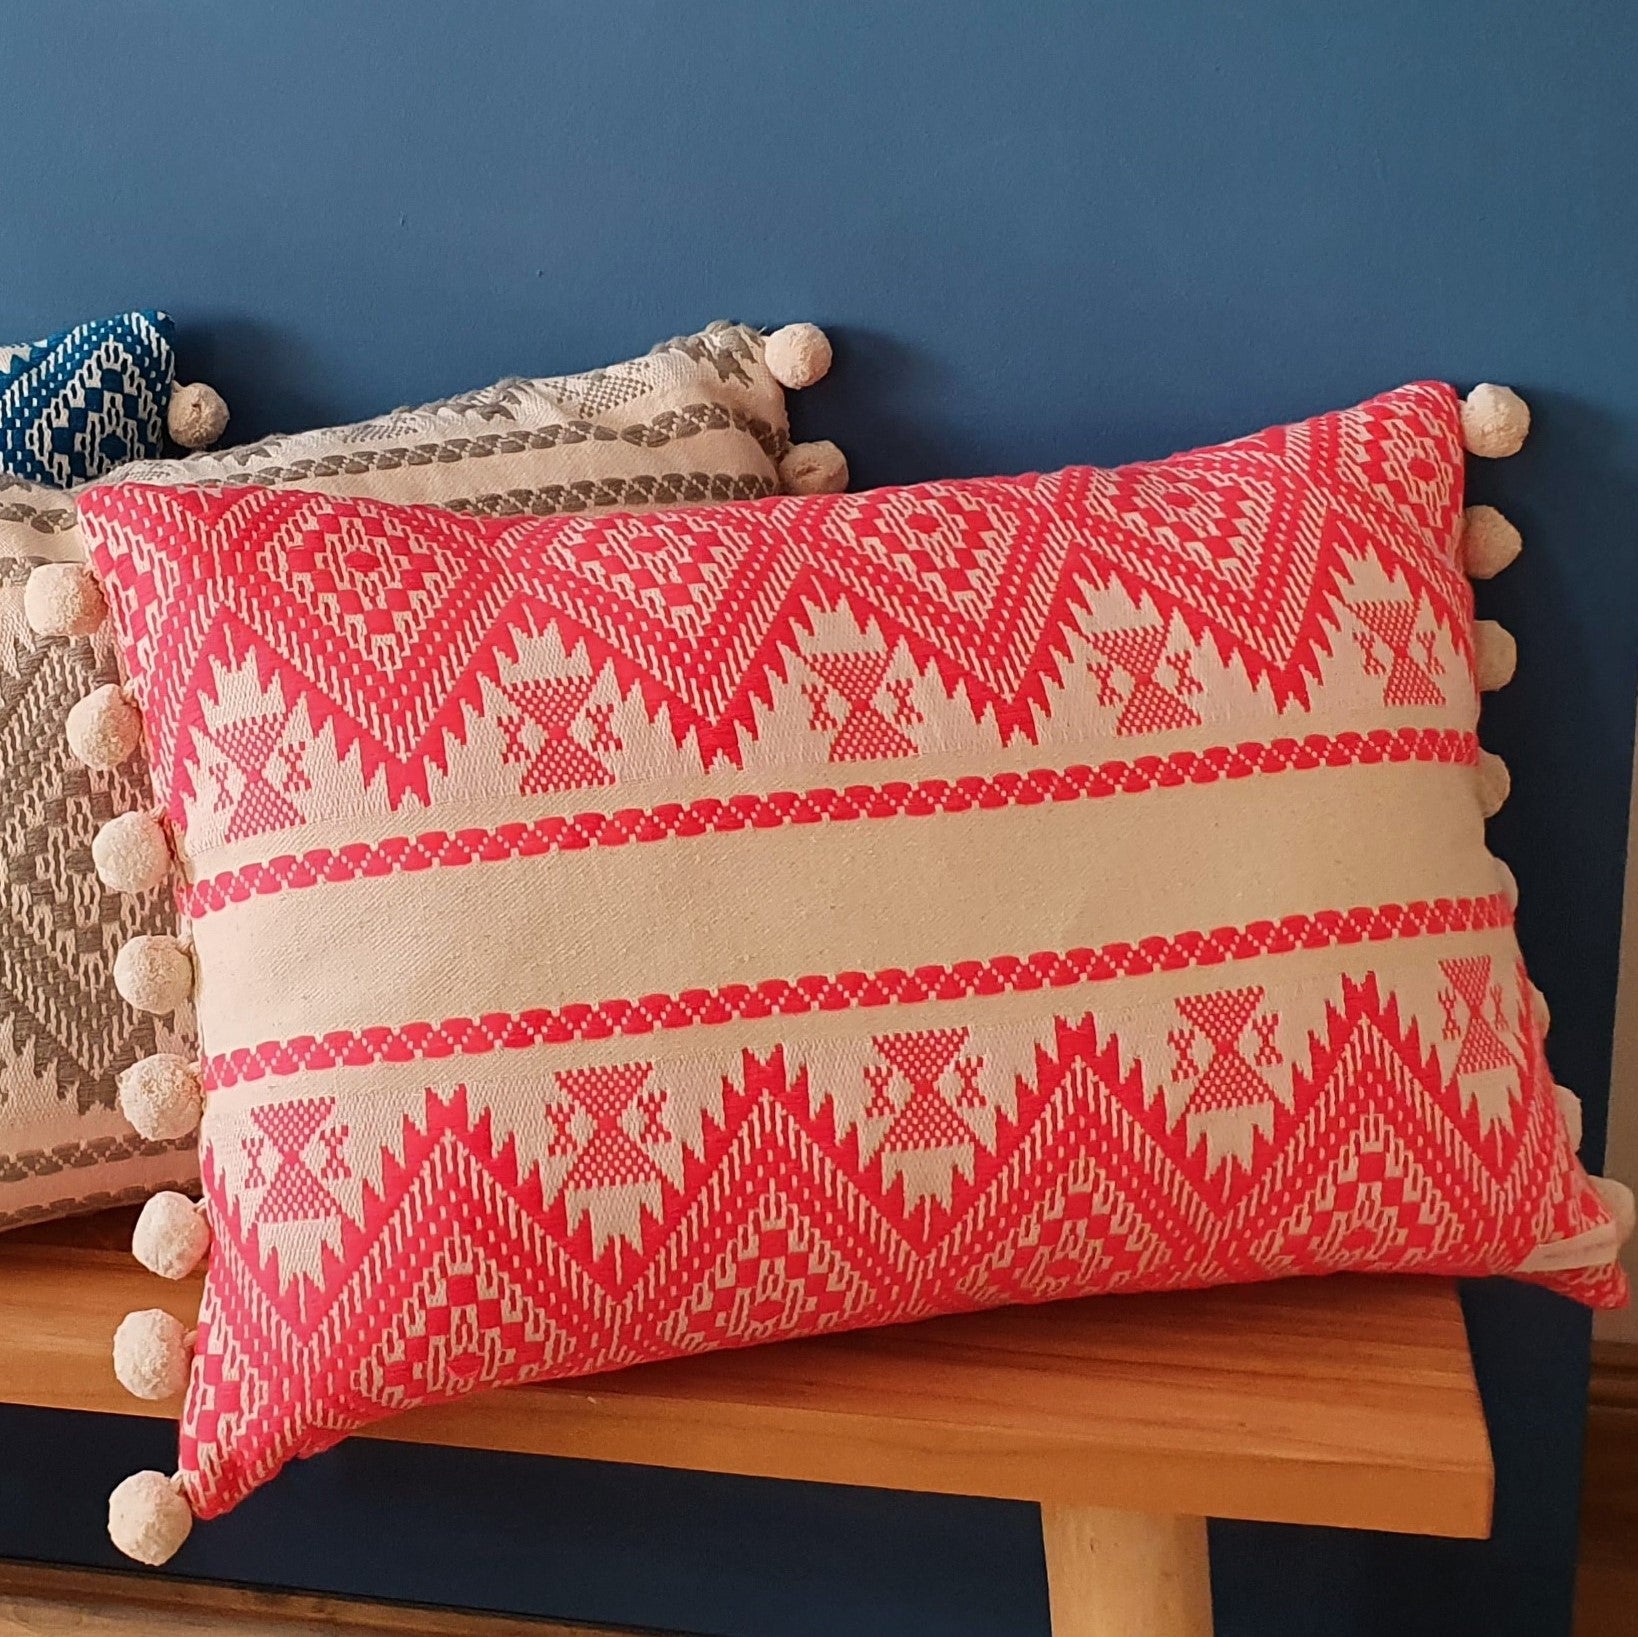 Aztec Pondicherry-Pink Large Rectangular Cushion with Pom Poms